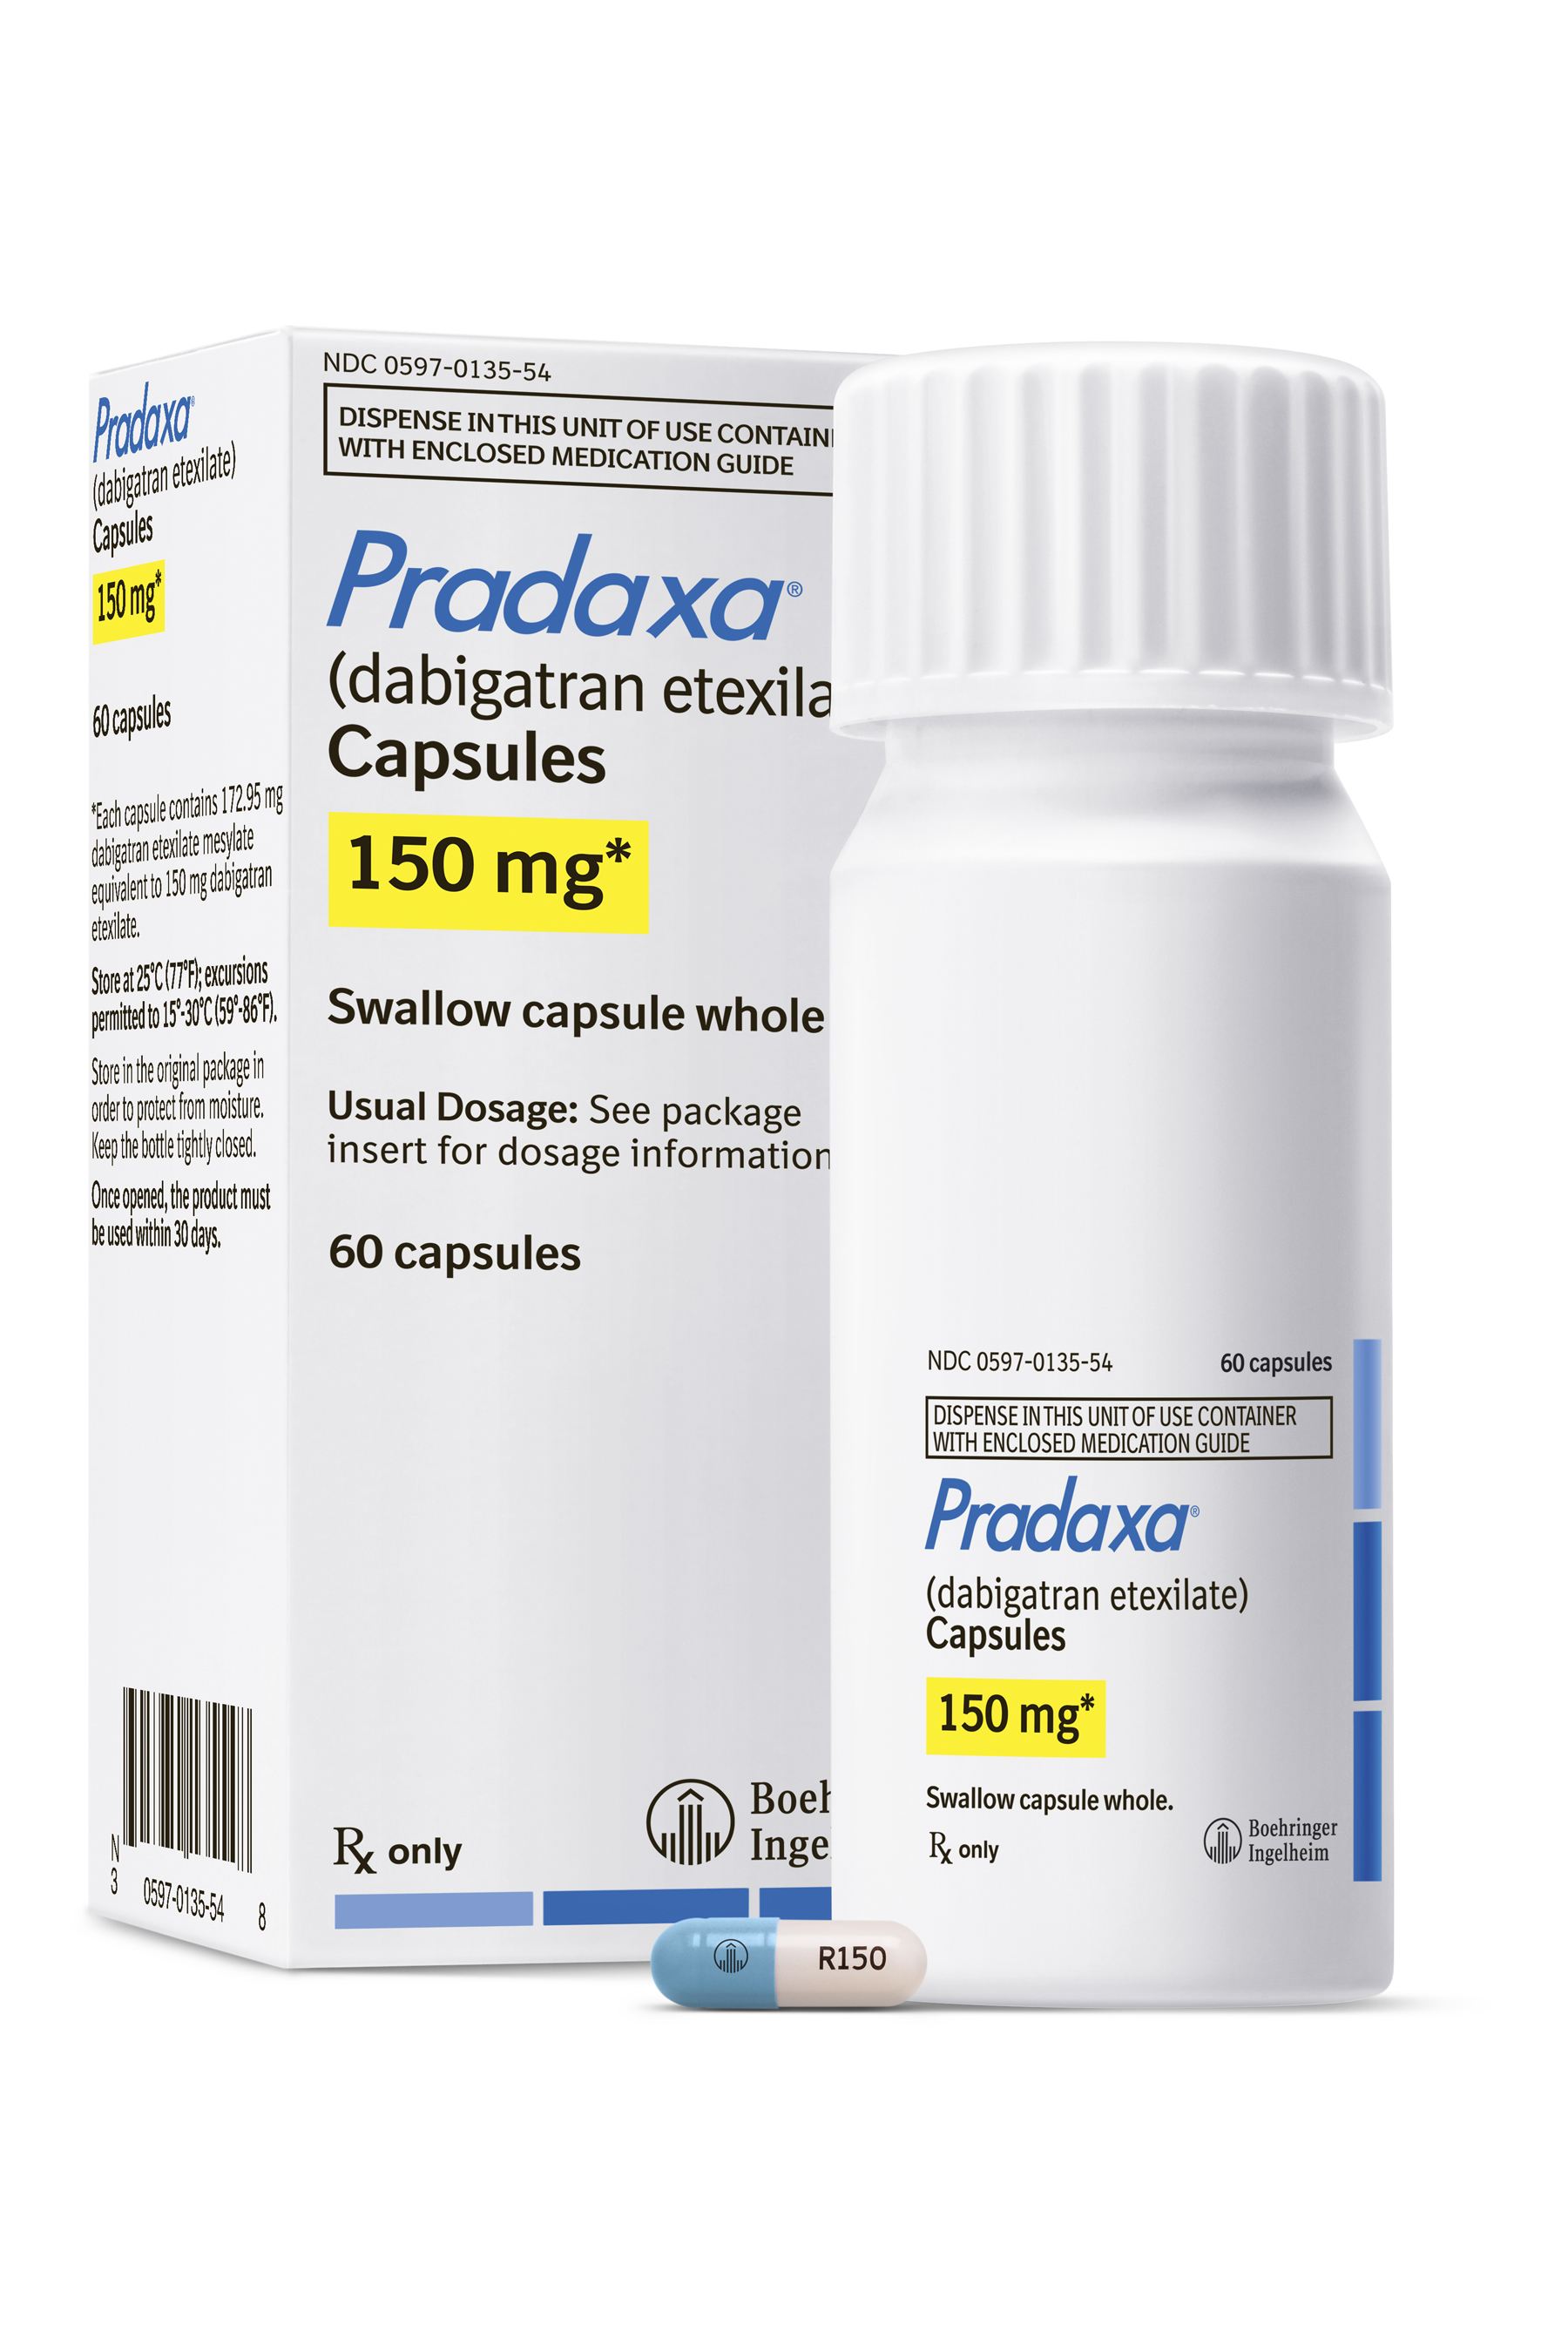 2 Studies Find Gastrointestinal Bleeding Risk From Pradaxa